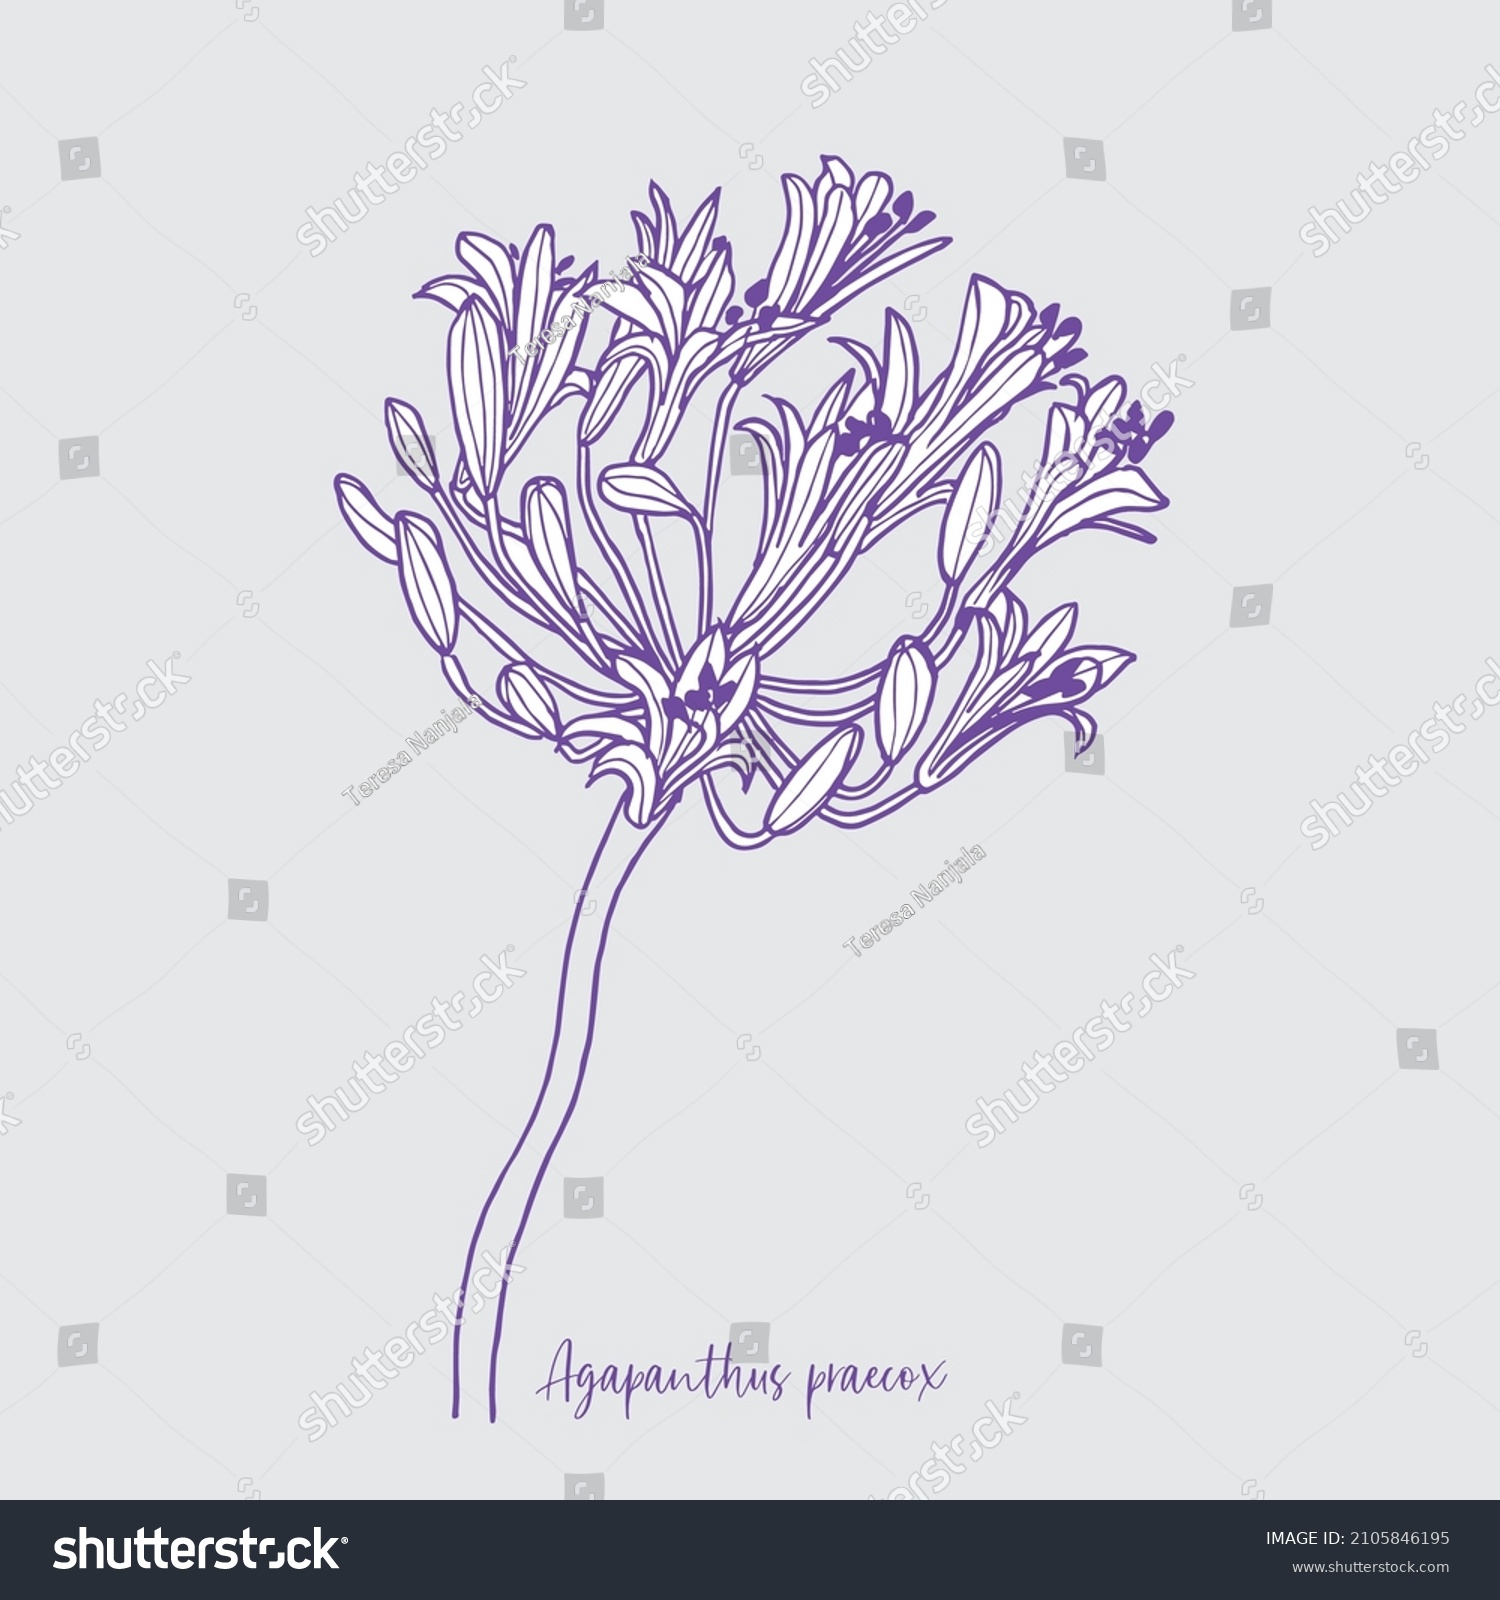 SVG of Agapanthus praecox flower stem in blue purple svg